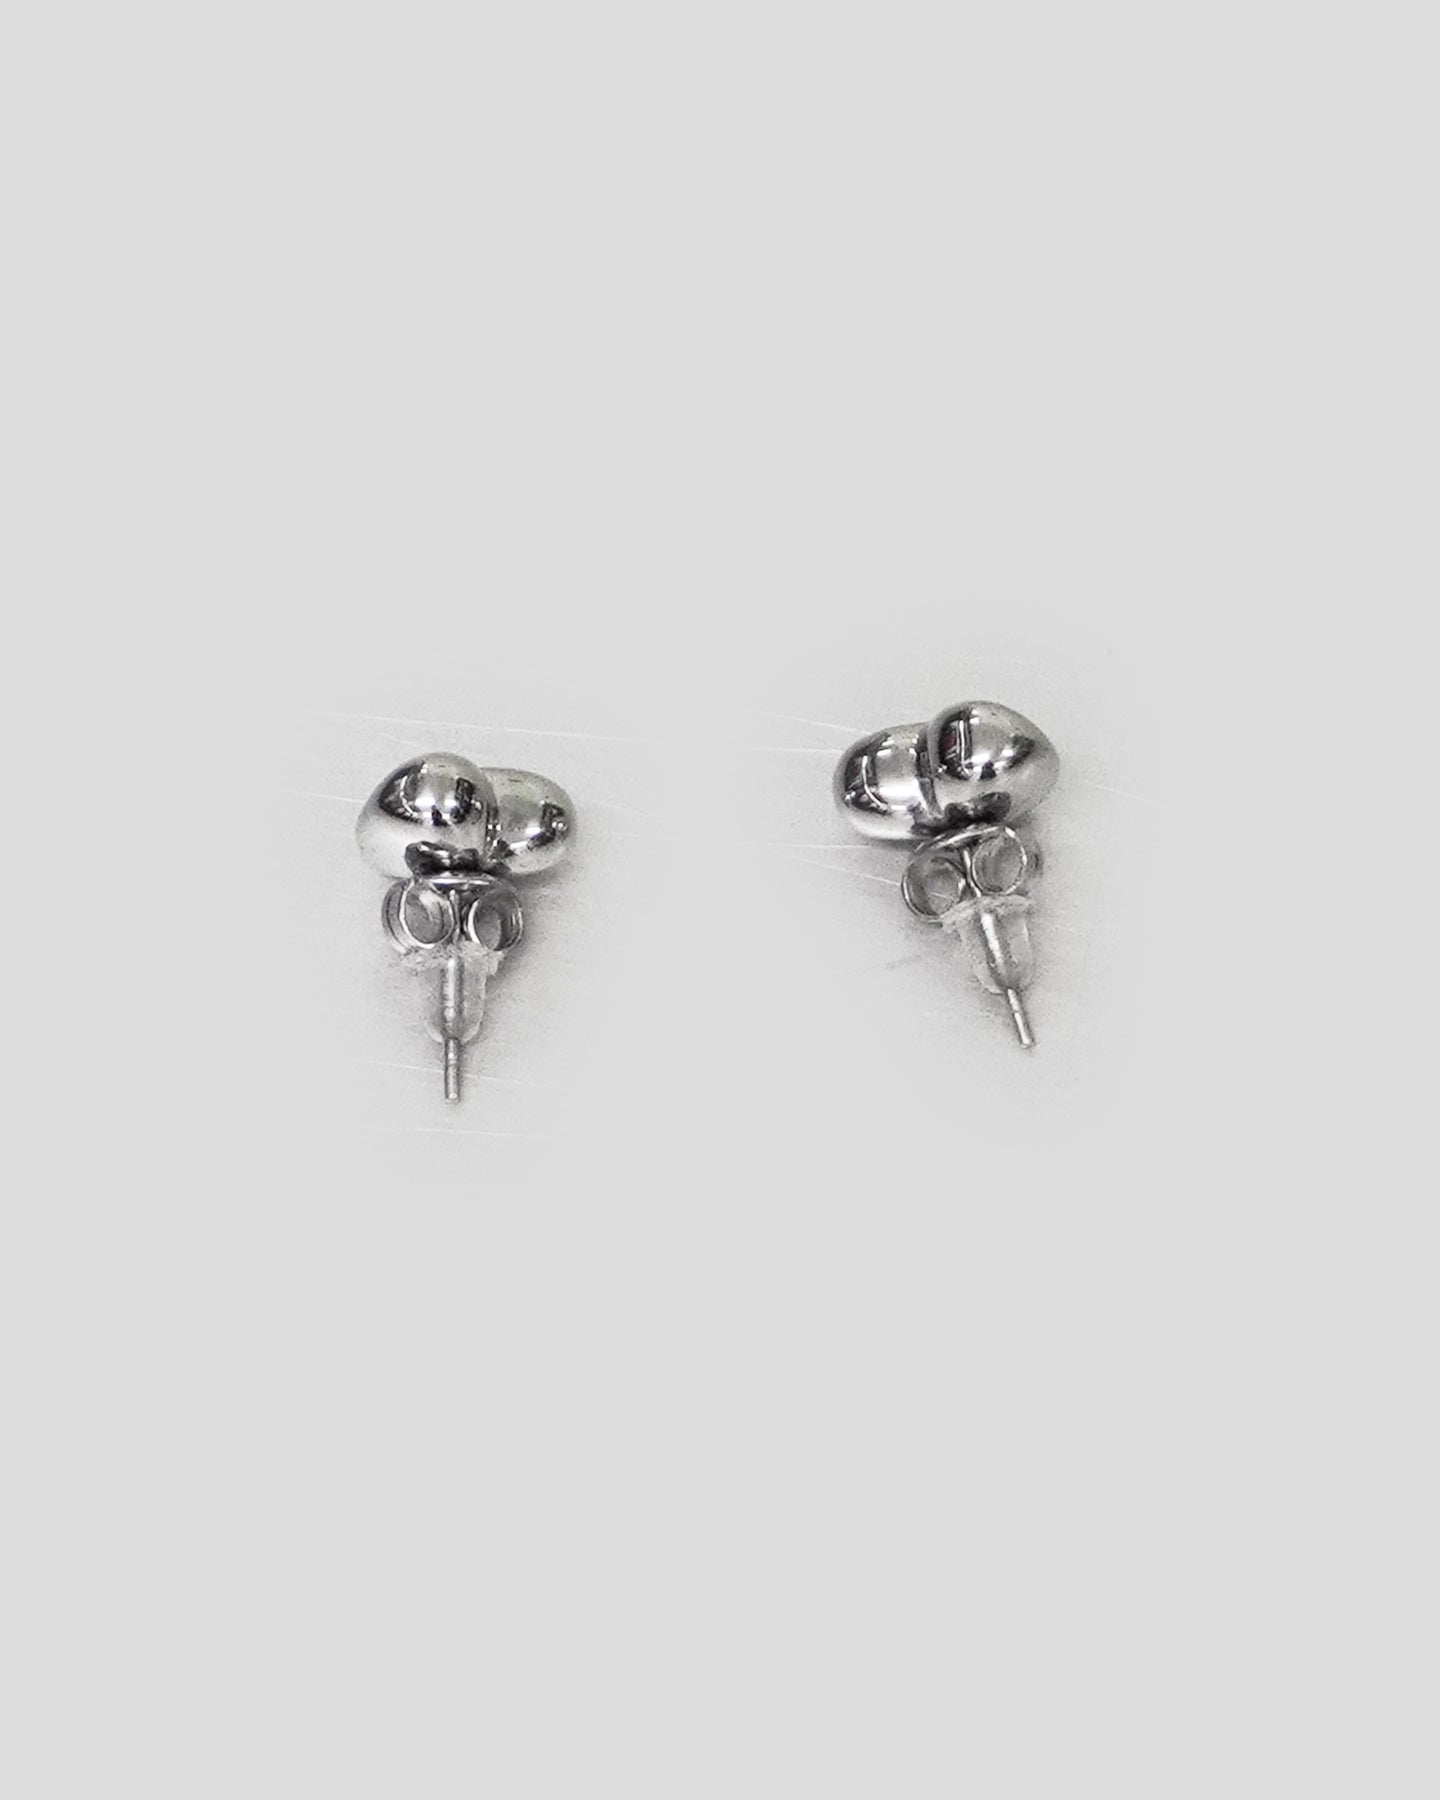 Marland Backus - Pair of Silver Heart Earrings